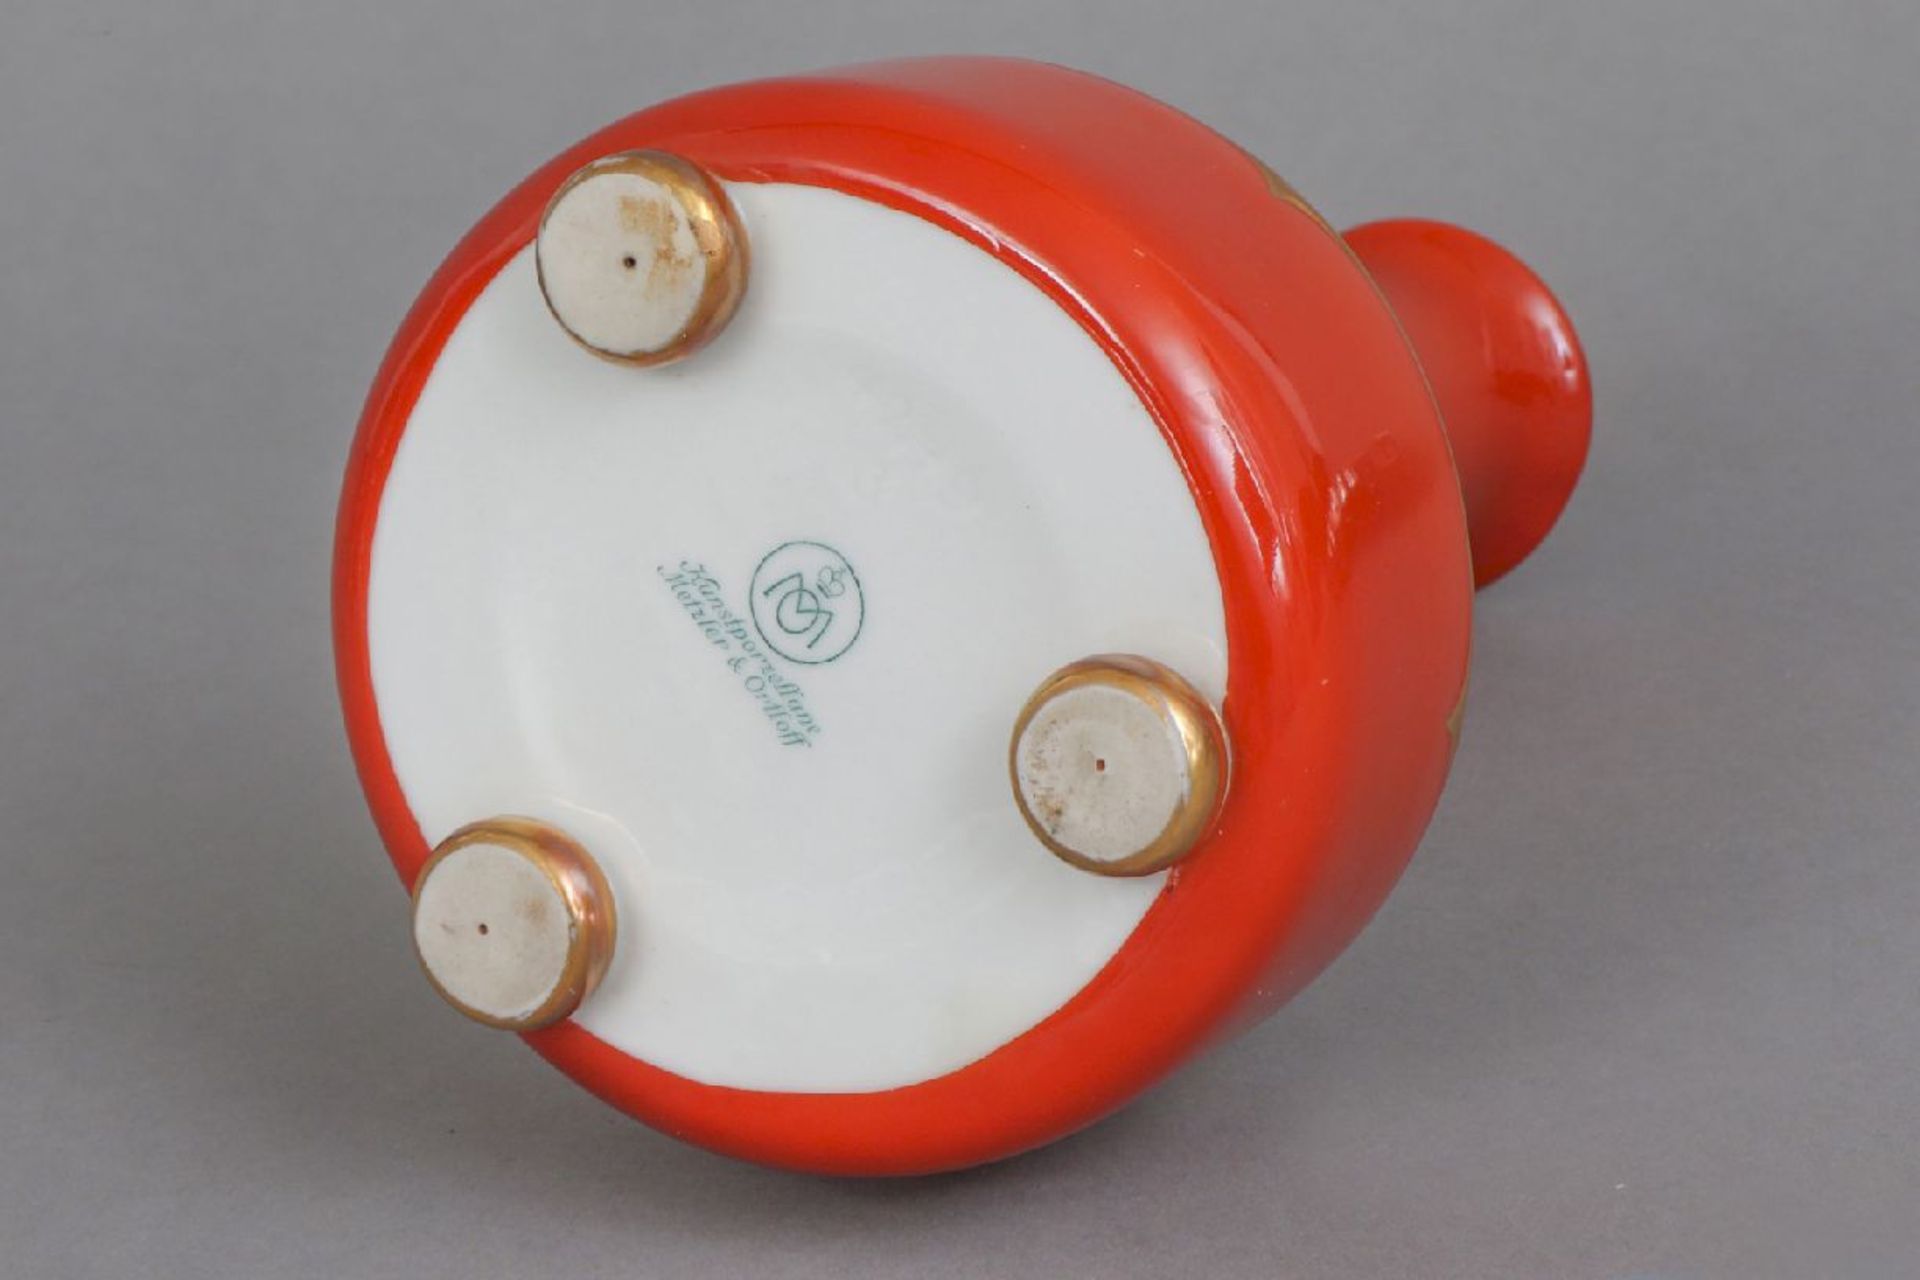 METZLER & ORTLOFF Porzellan-Vase1920-1930er Jahre, orange-roter Fond, Golddekor, keulenförmiger - Bild 2 aus 5